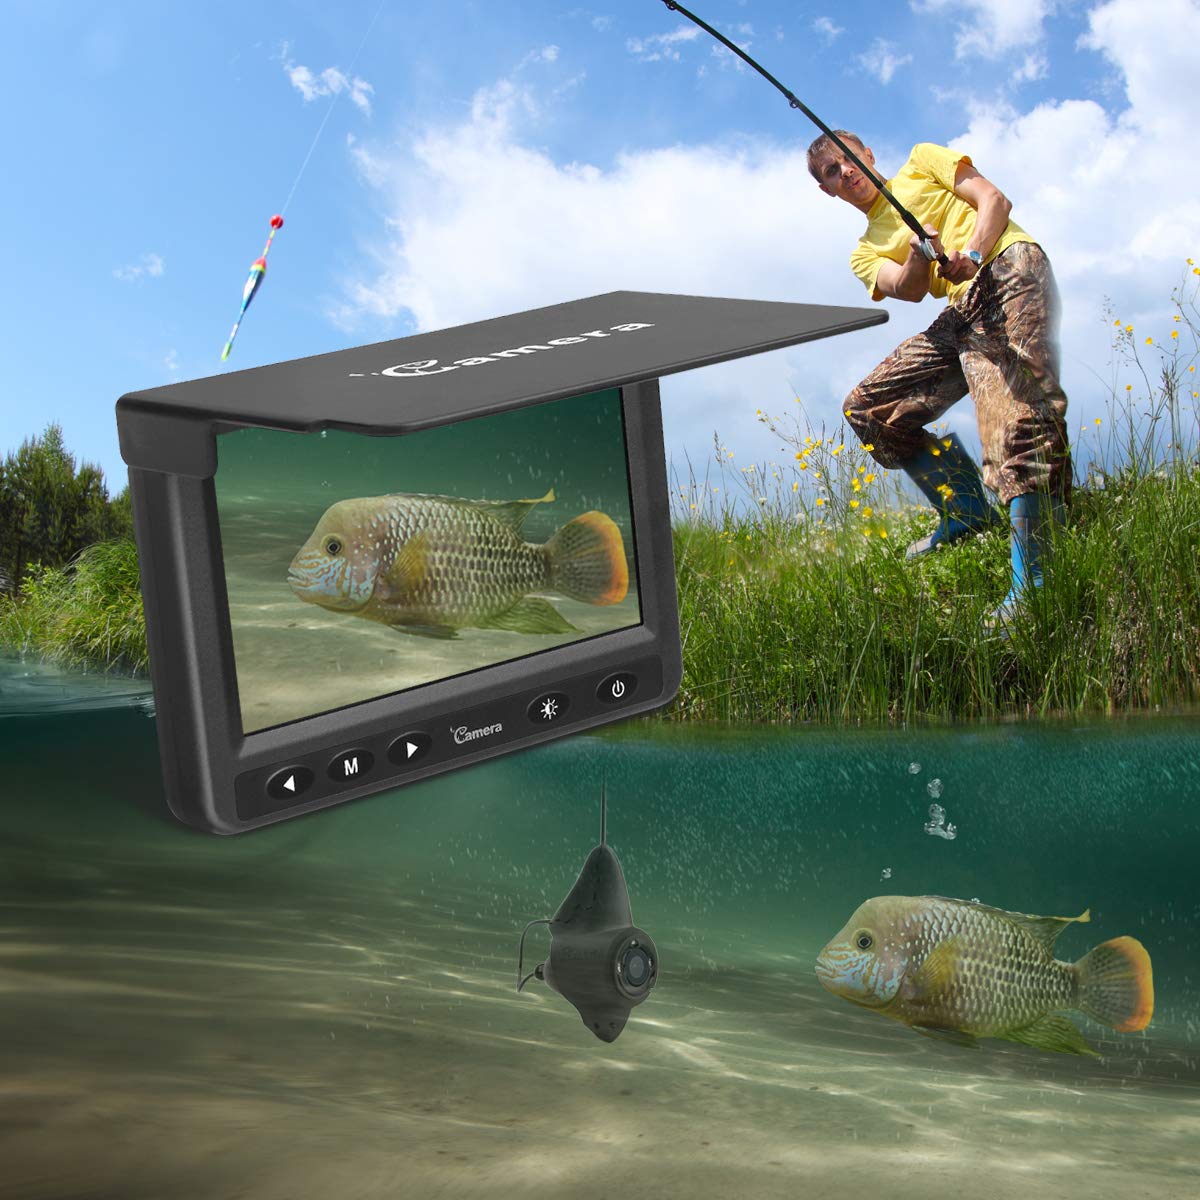 Moocor Underwater Fishing Camera Review